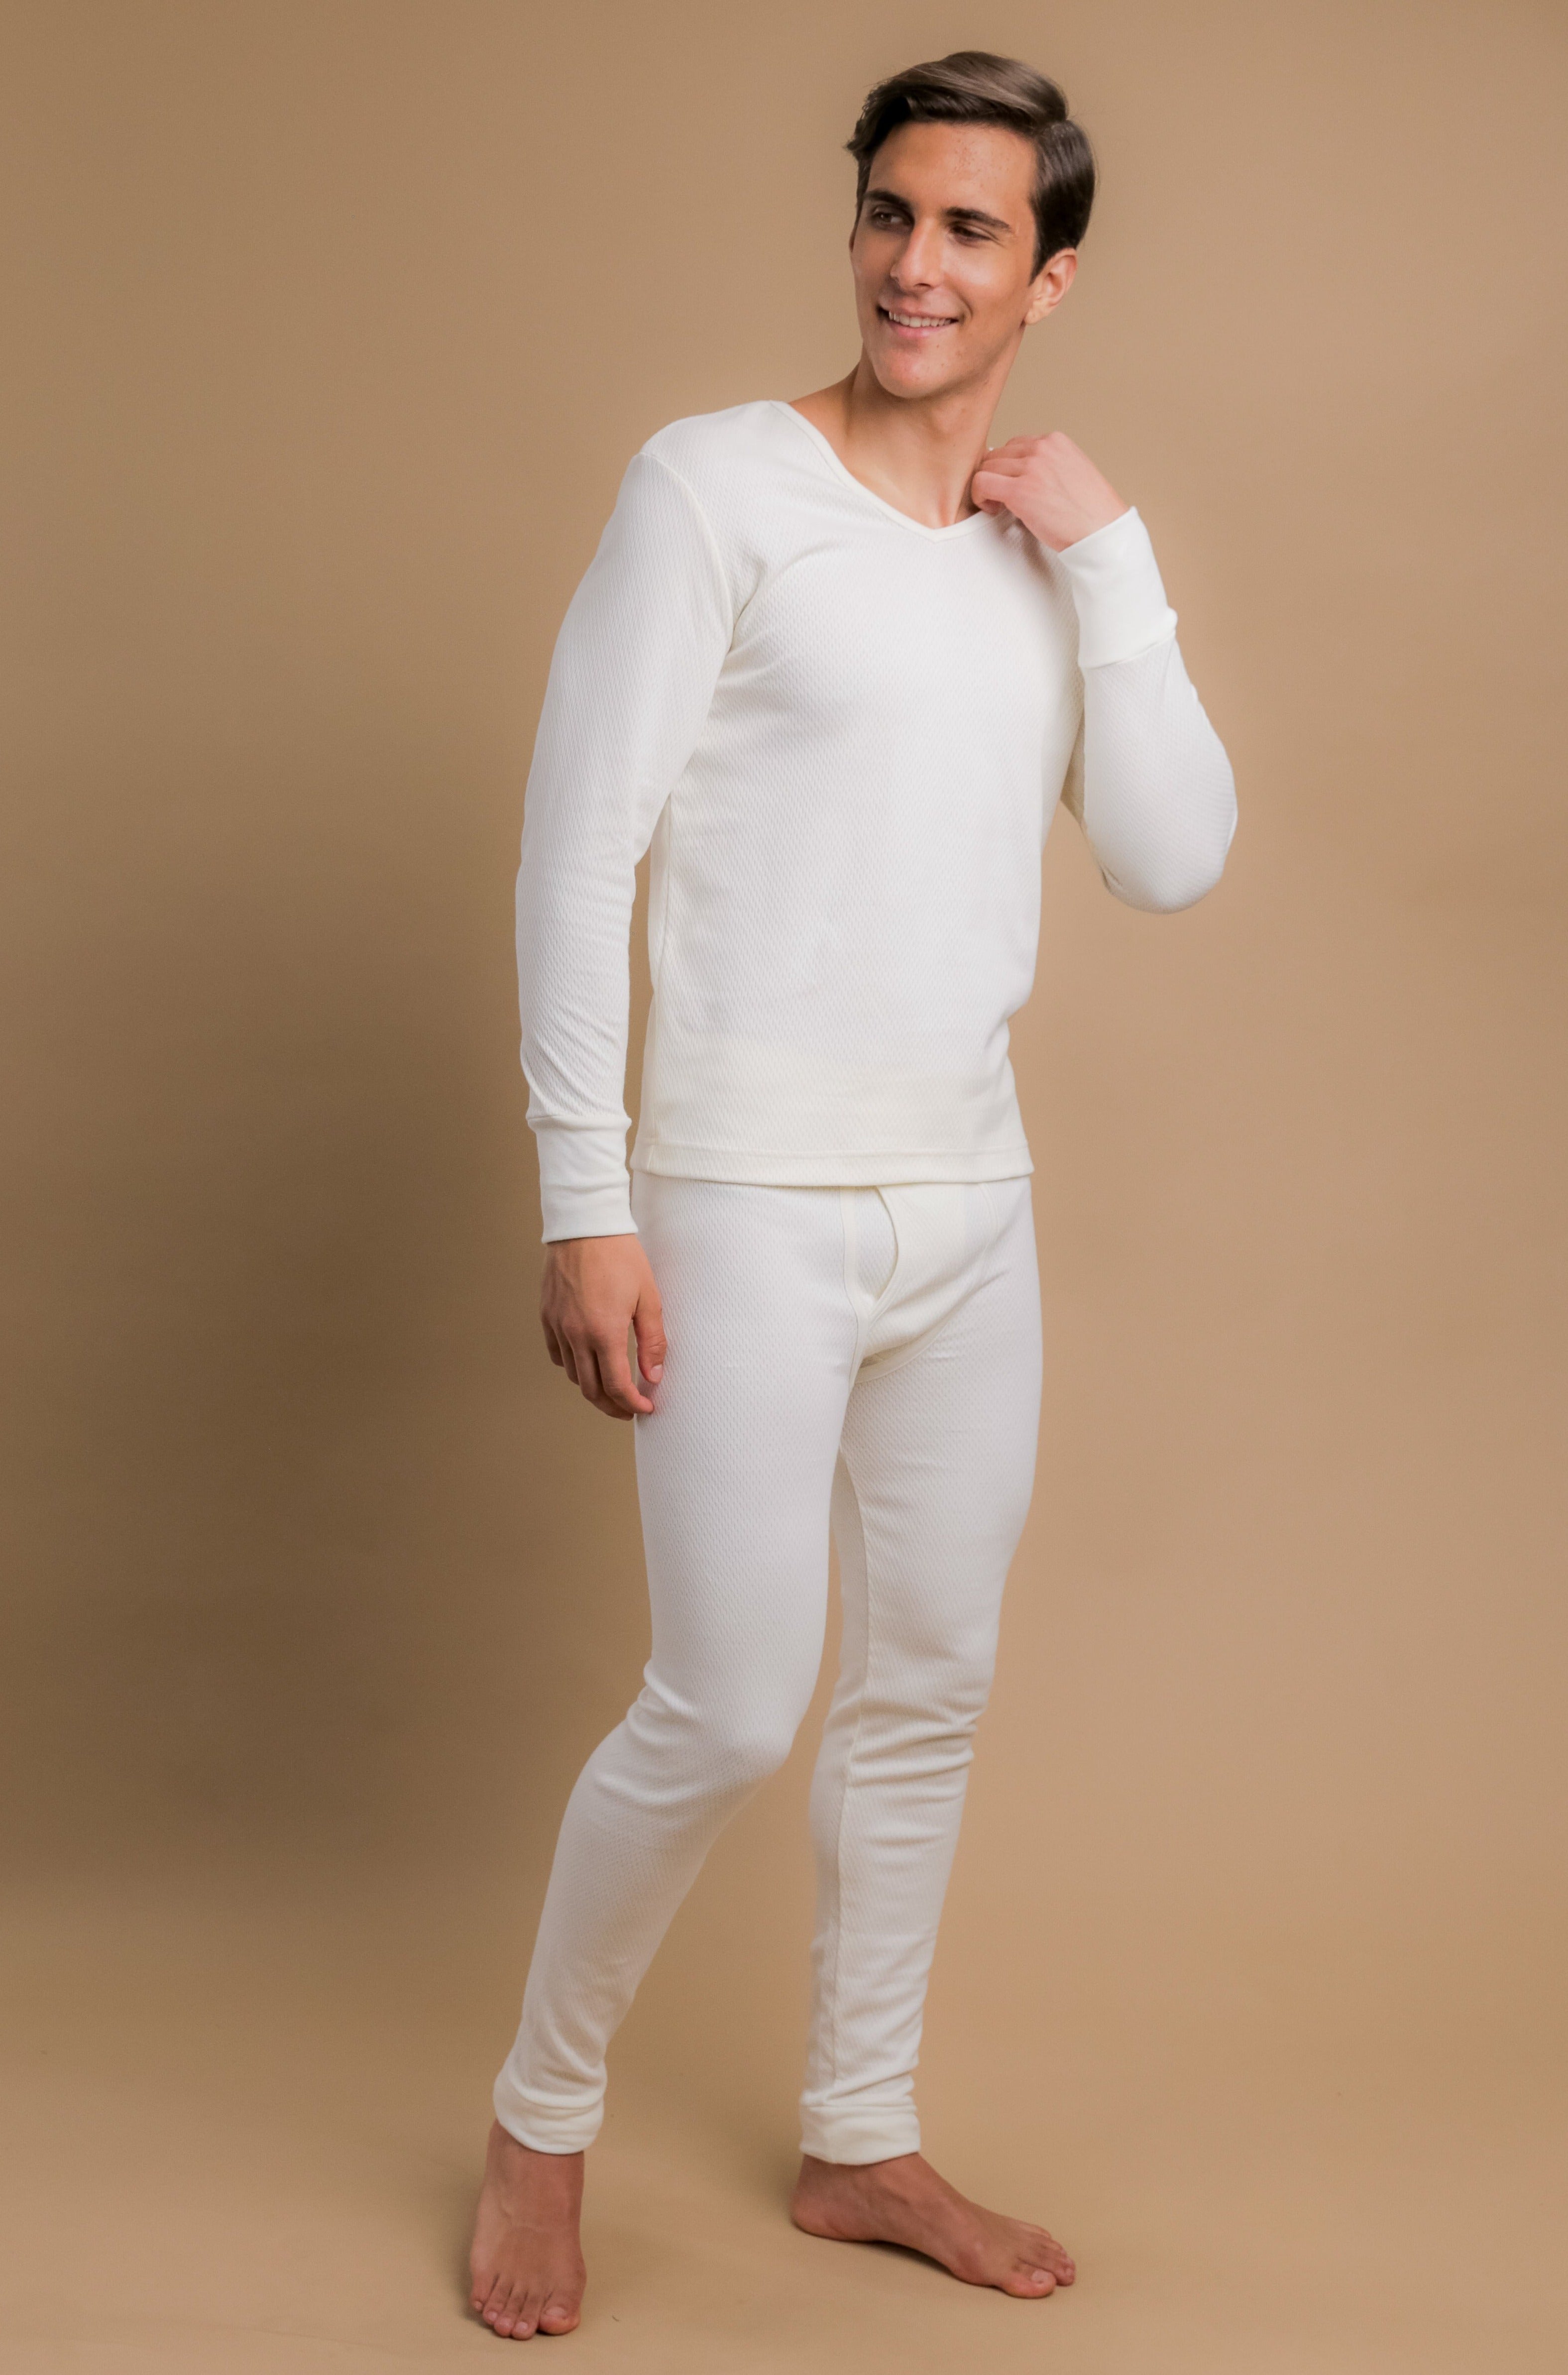 Thermal Underwear for Men Soft Long Johns Cotton Algeria